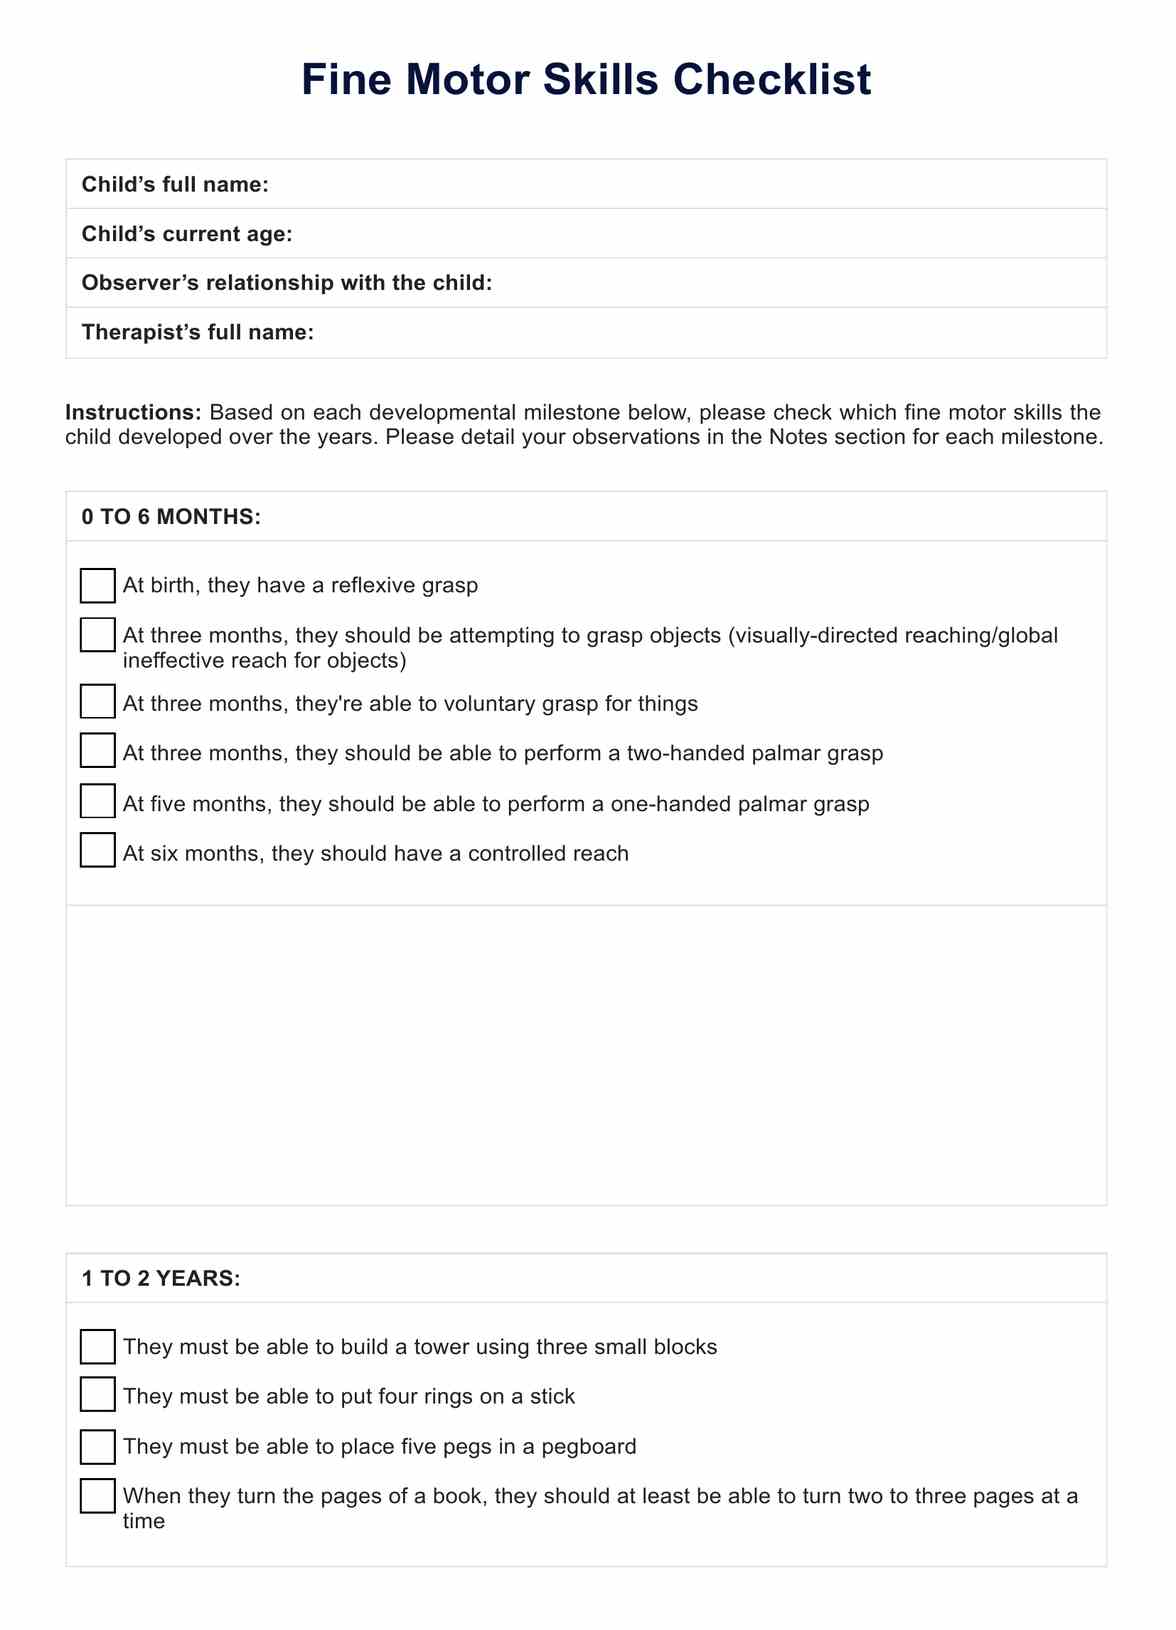 Fine Motor Skills Checklist PDF Example